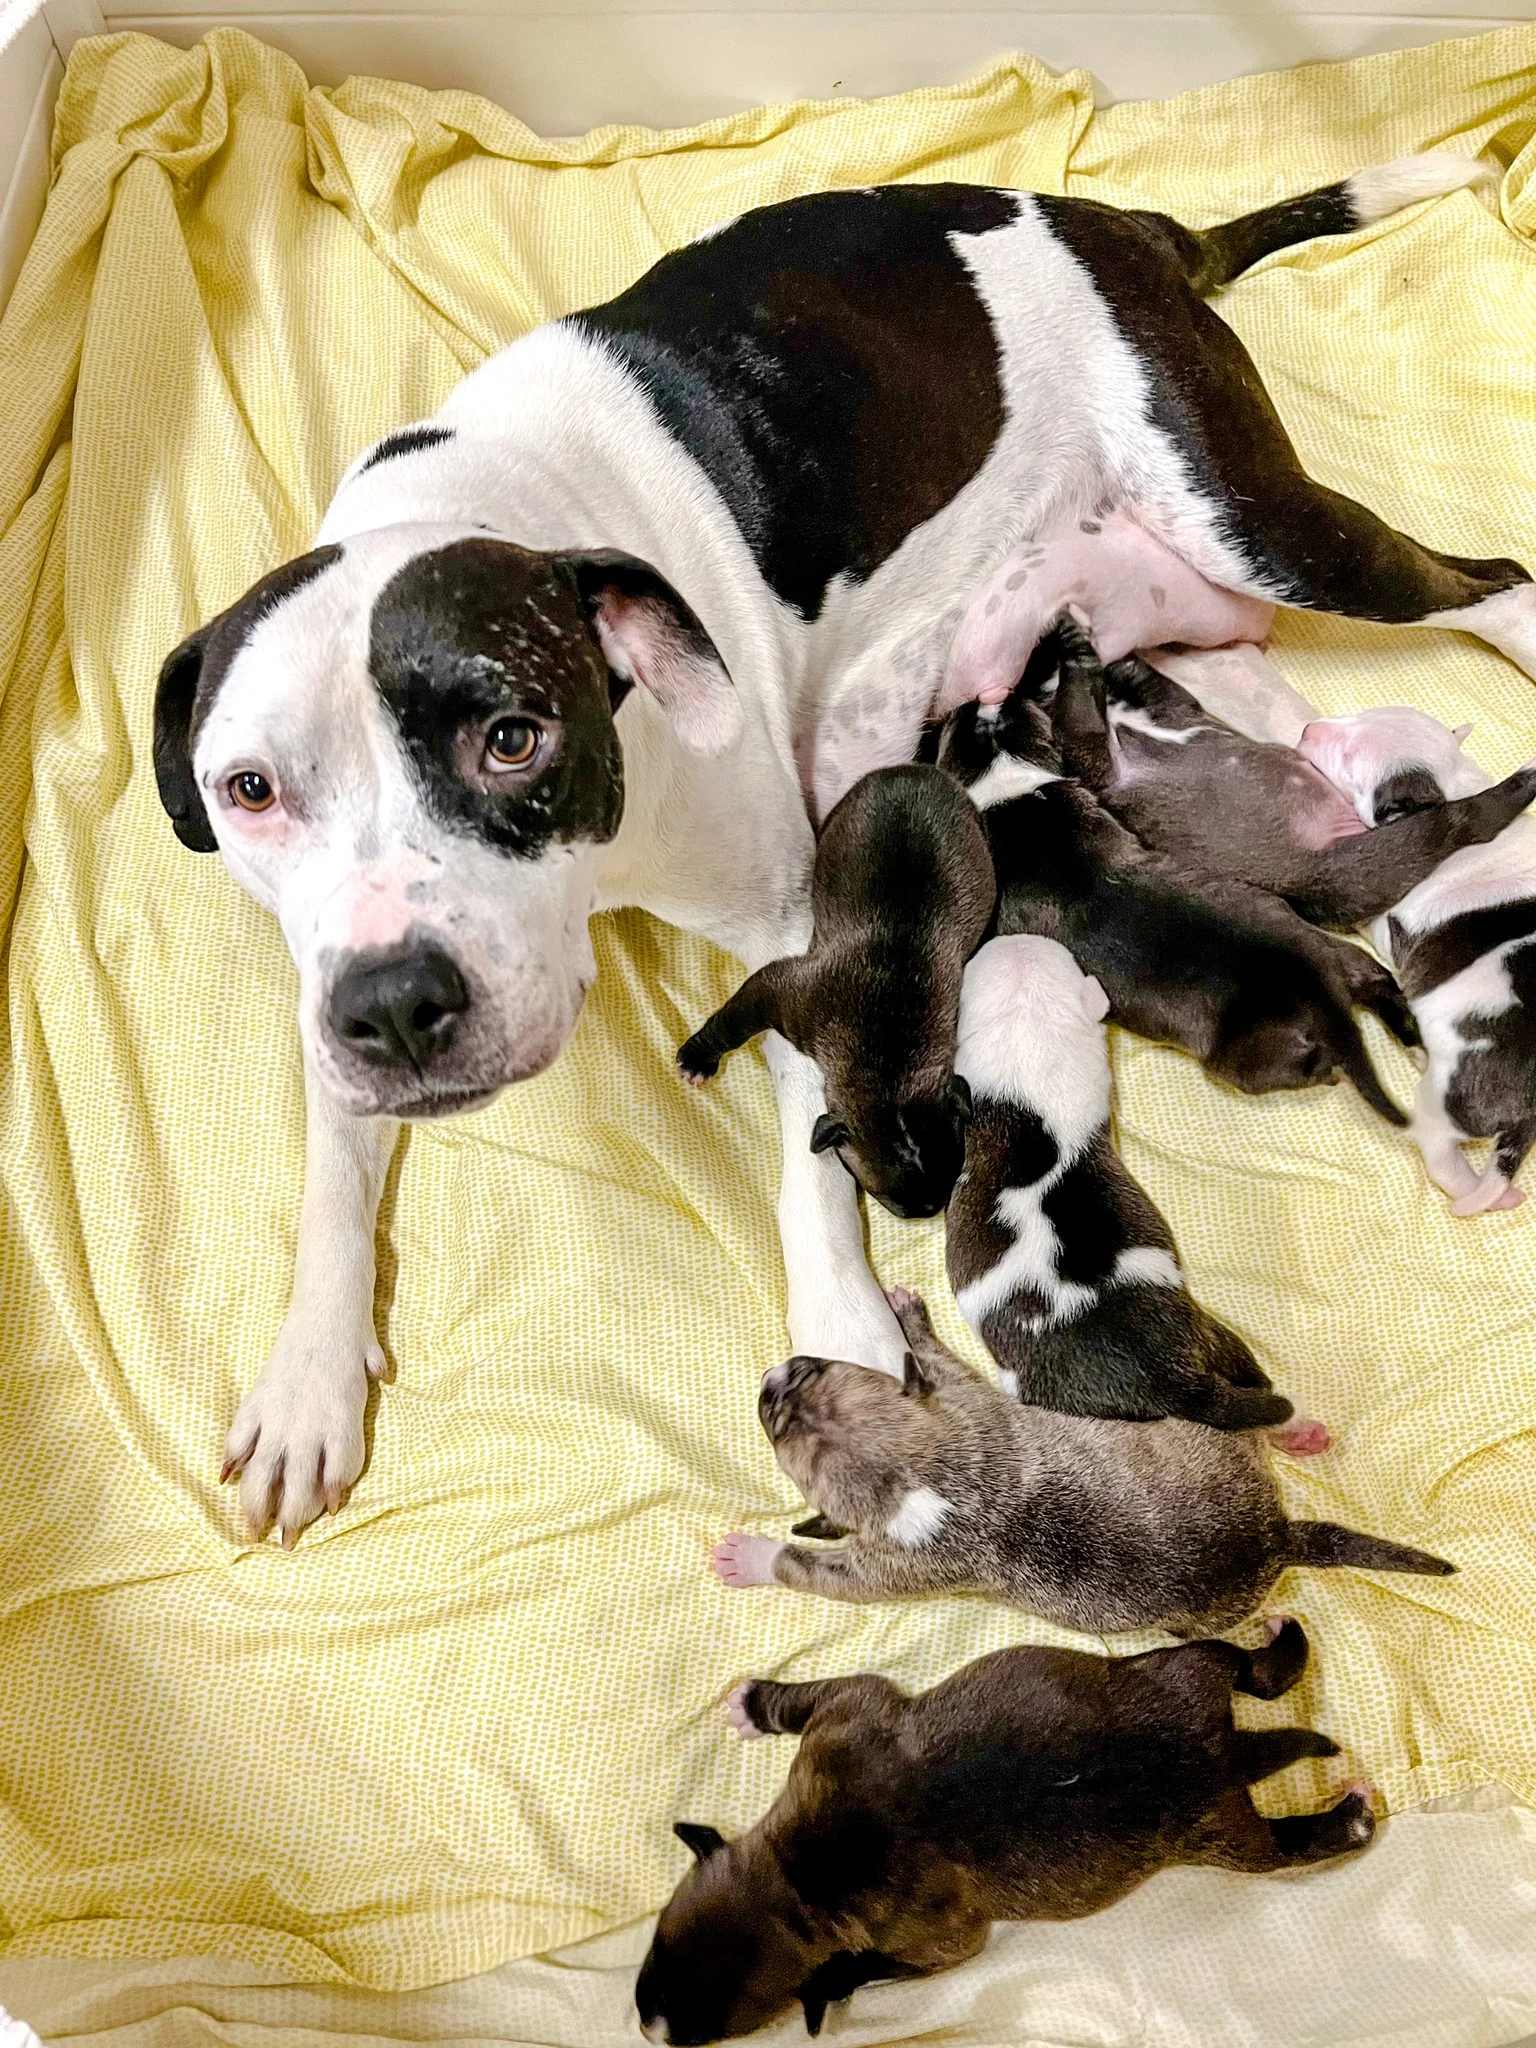 dog and her newborn puppies